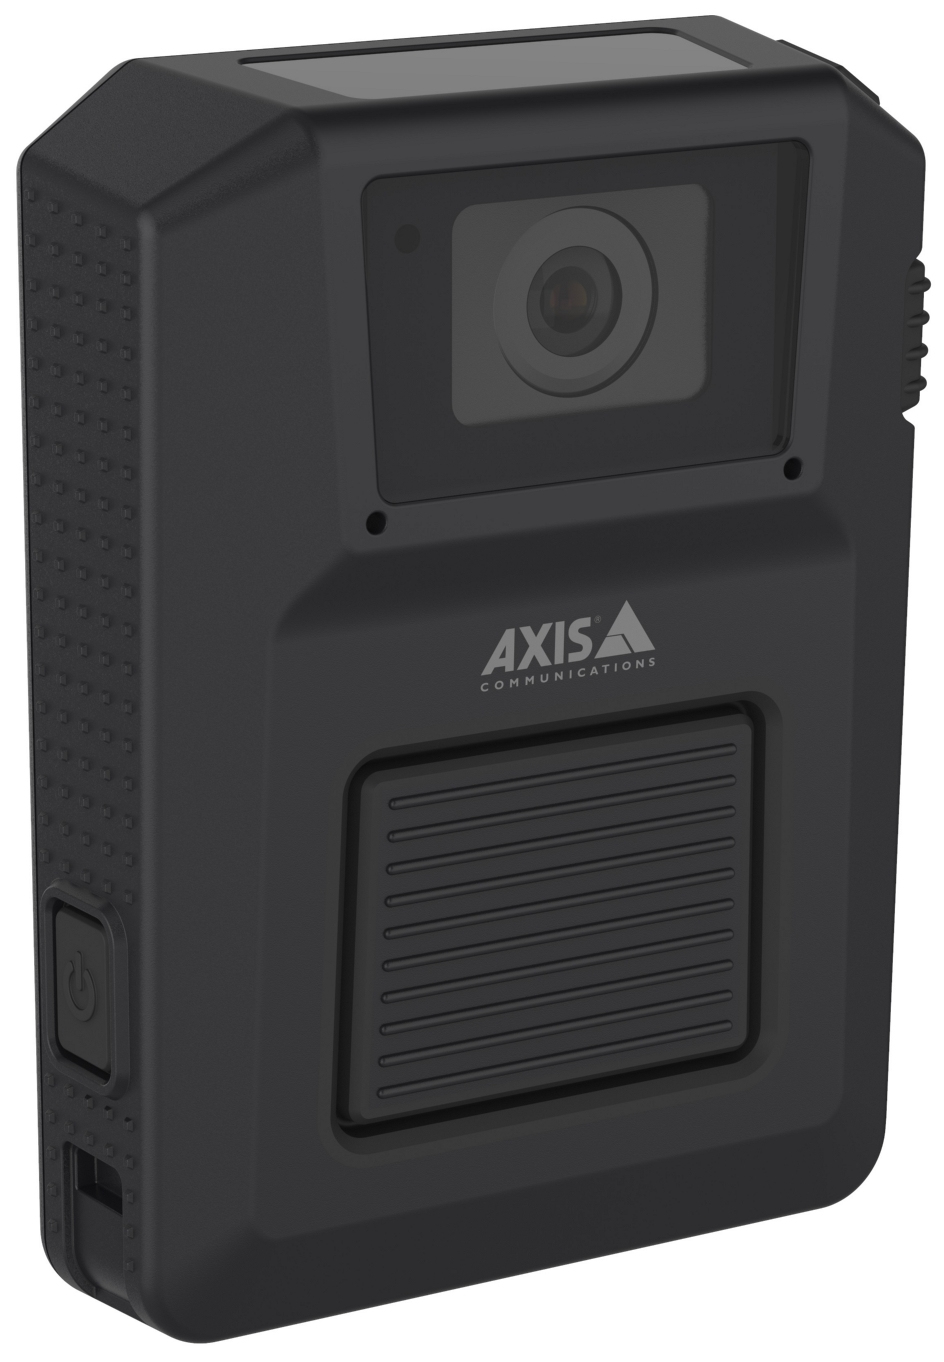 AXIS W100 Body Worn Camera